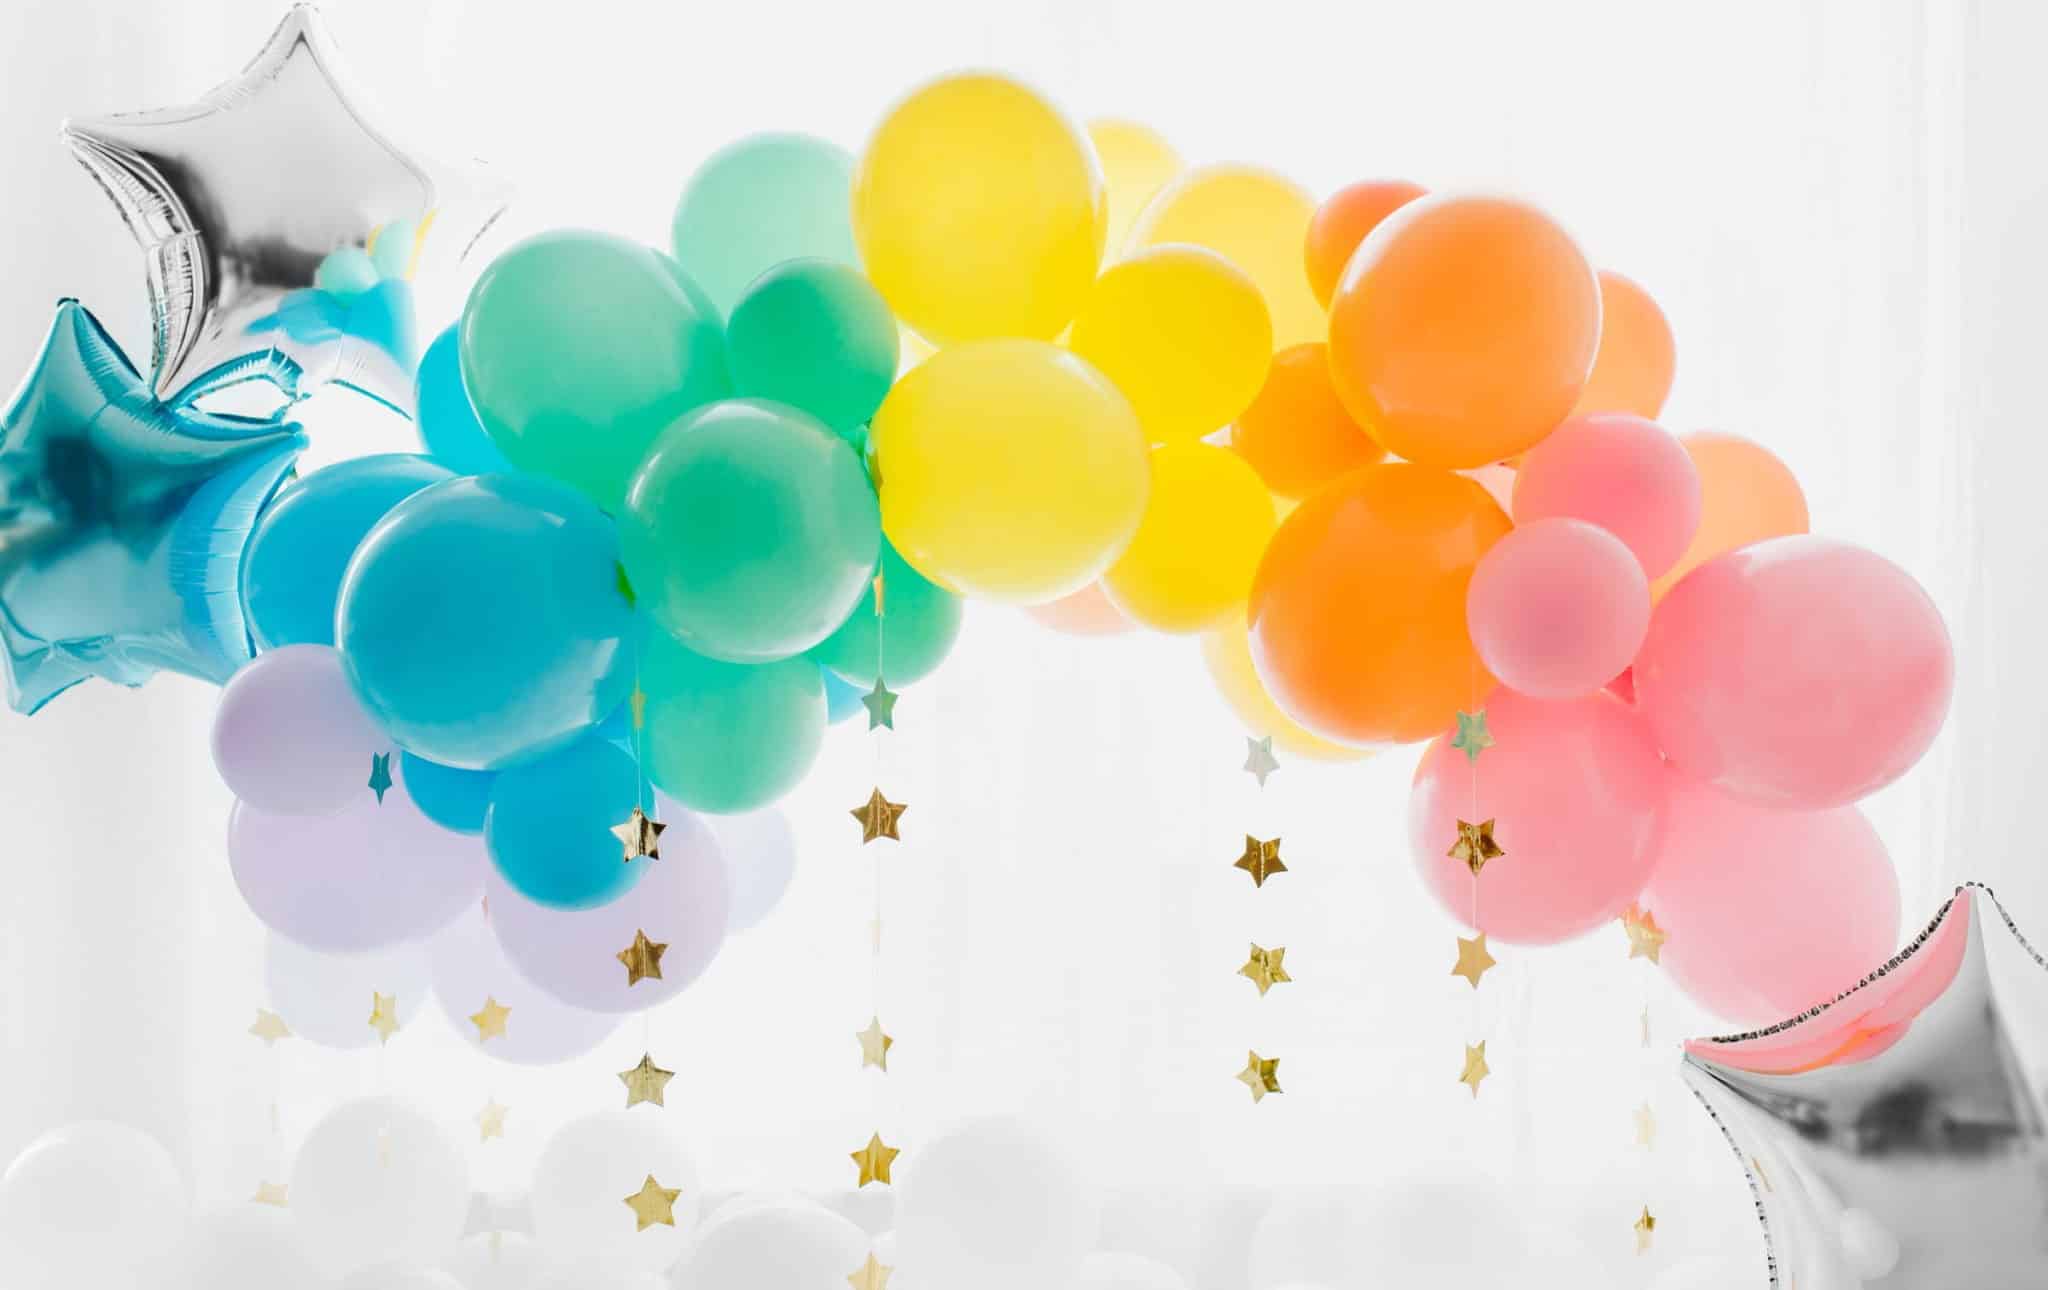 Balloons by Sylvia Plath